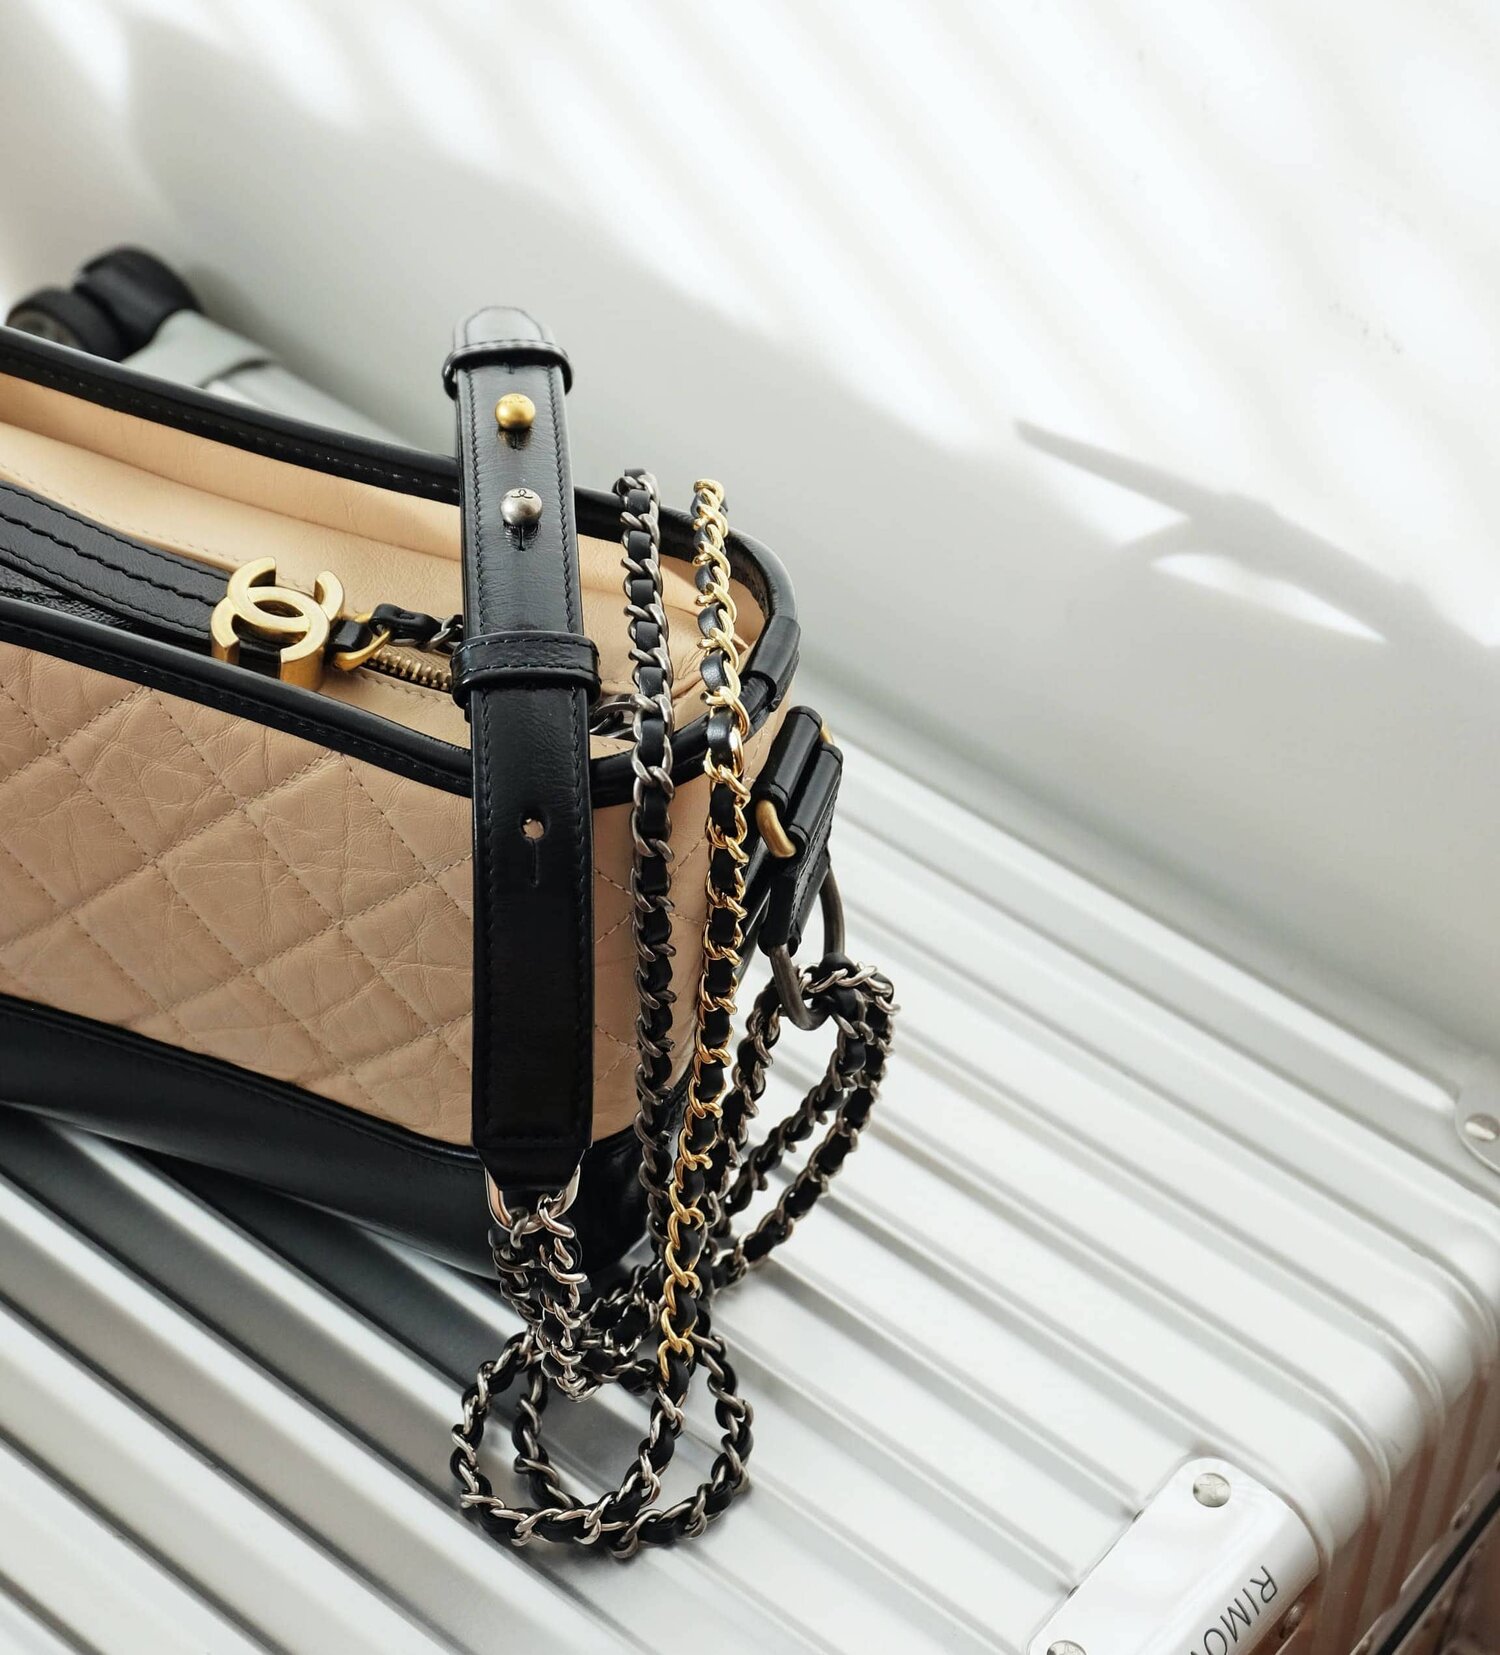 Céline Vintage - Leather Satchel Bag - White Ivory - Leather Handbag - Luxury  High Quality - Avvenice